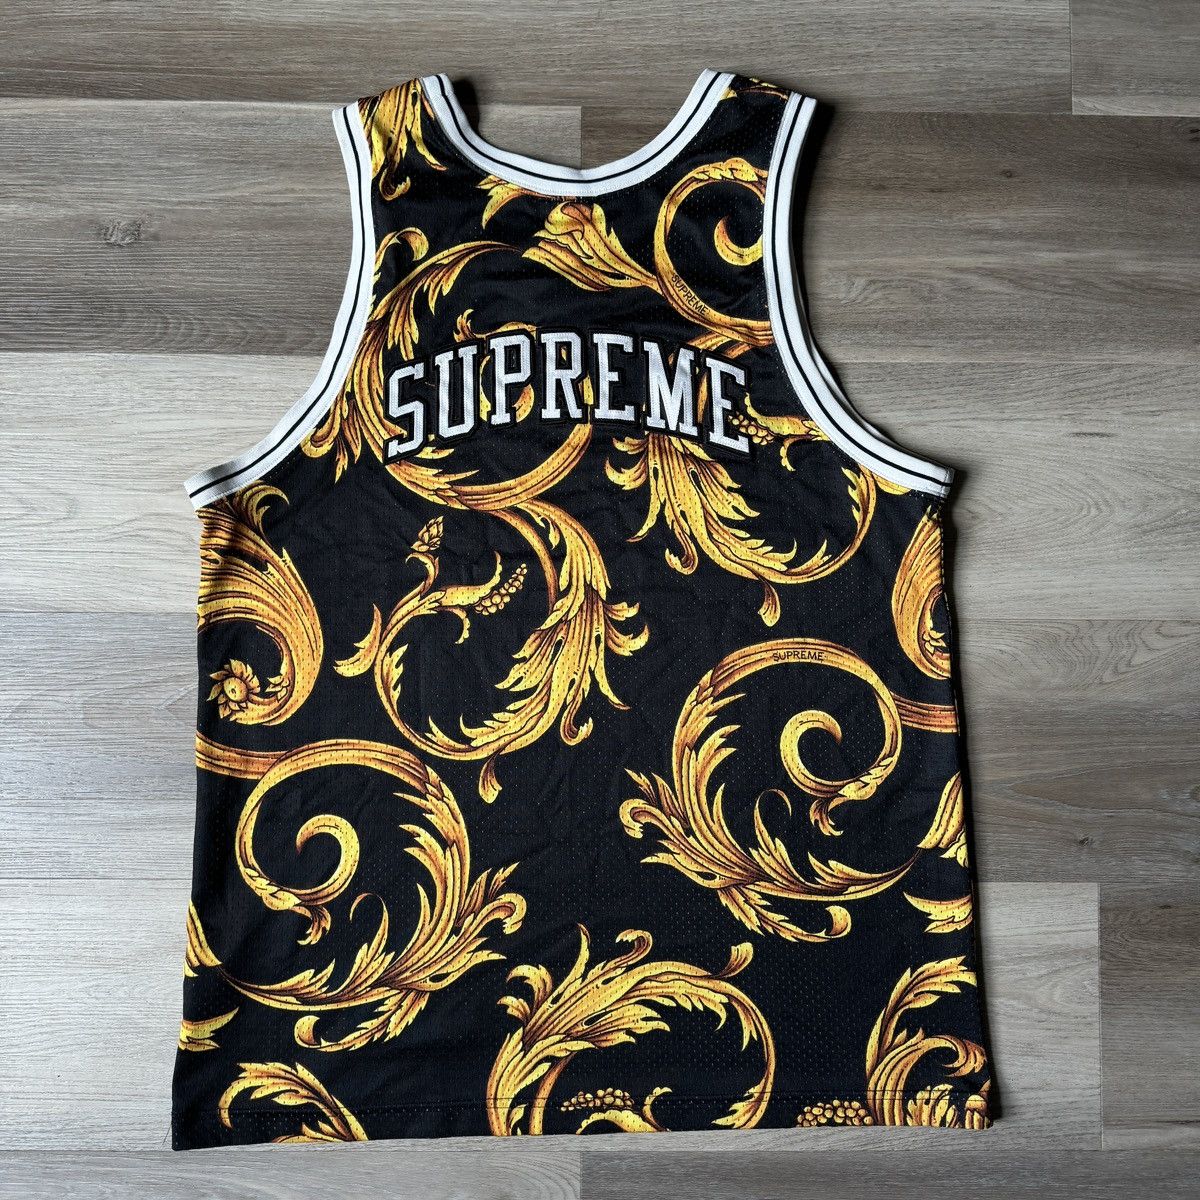 Nike Supreme Jersey | Grailed